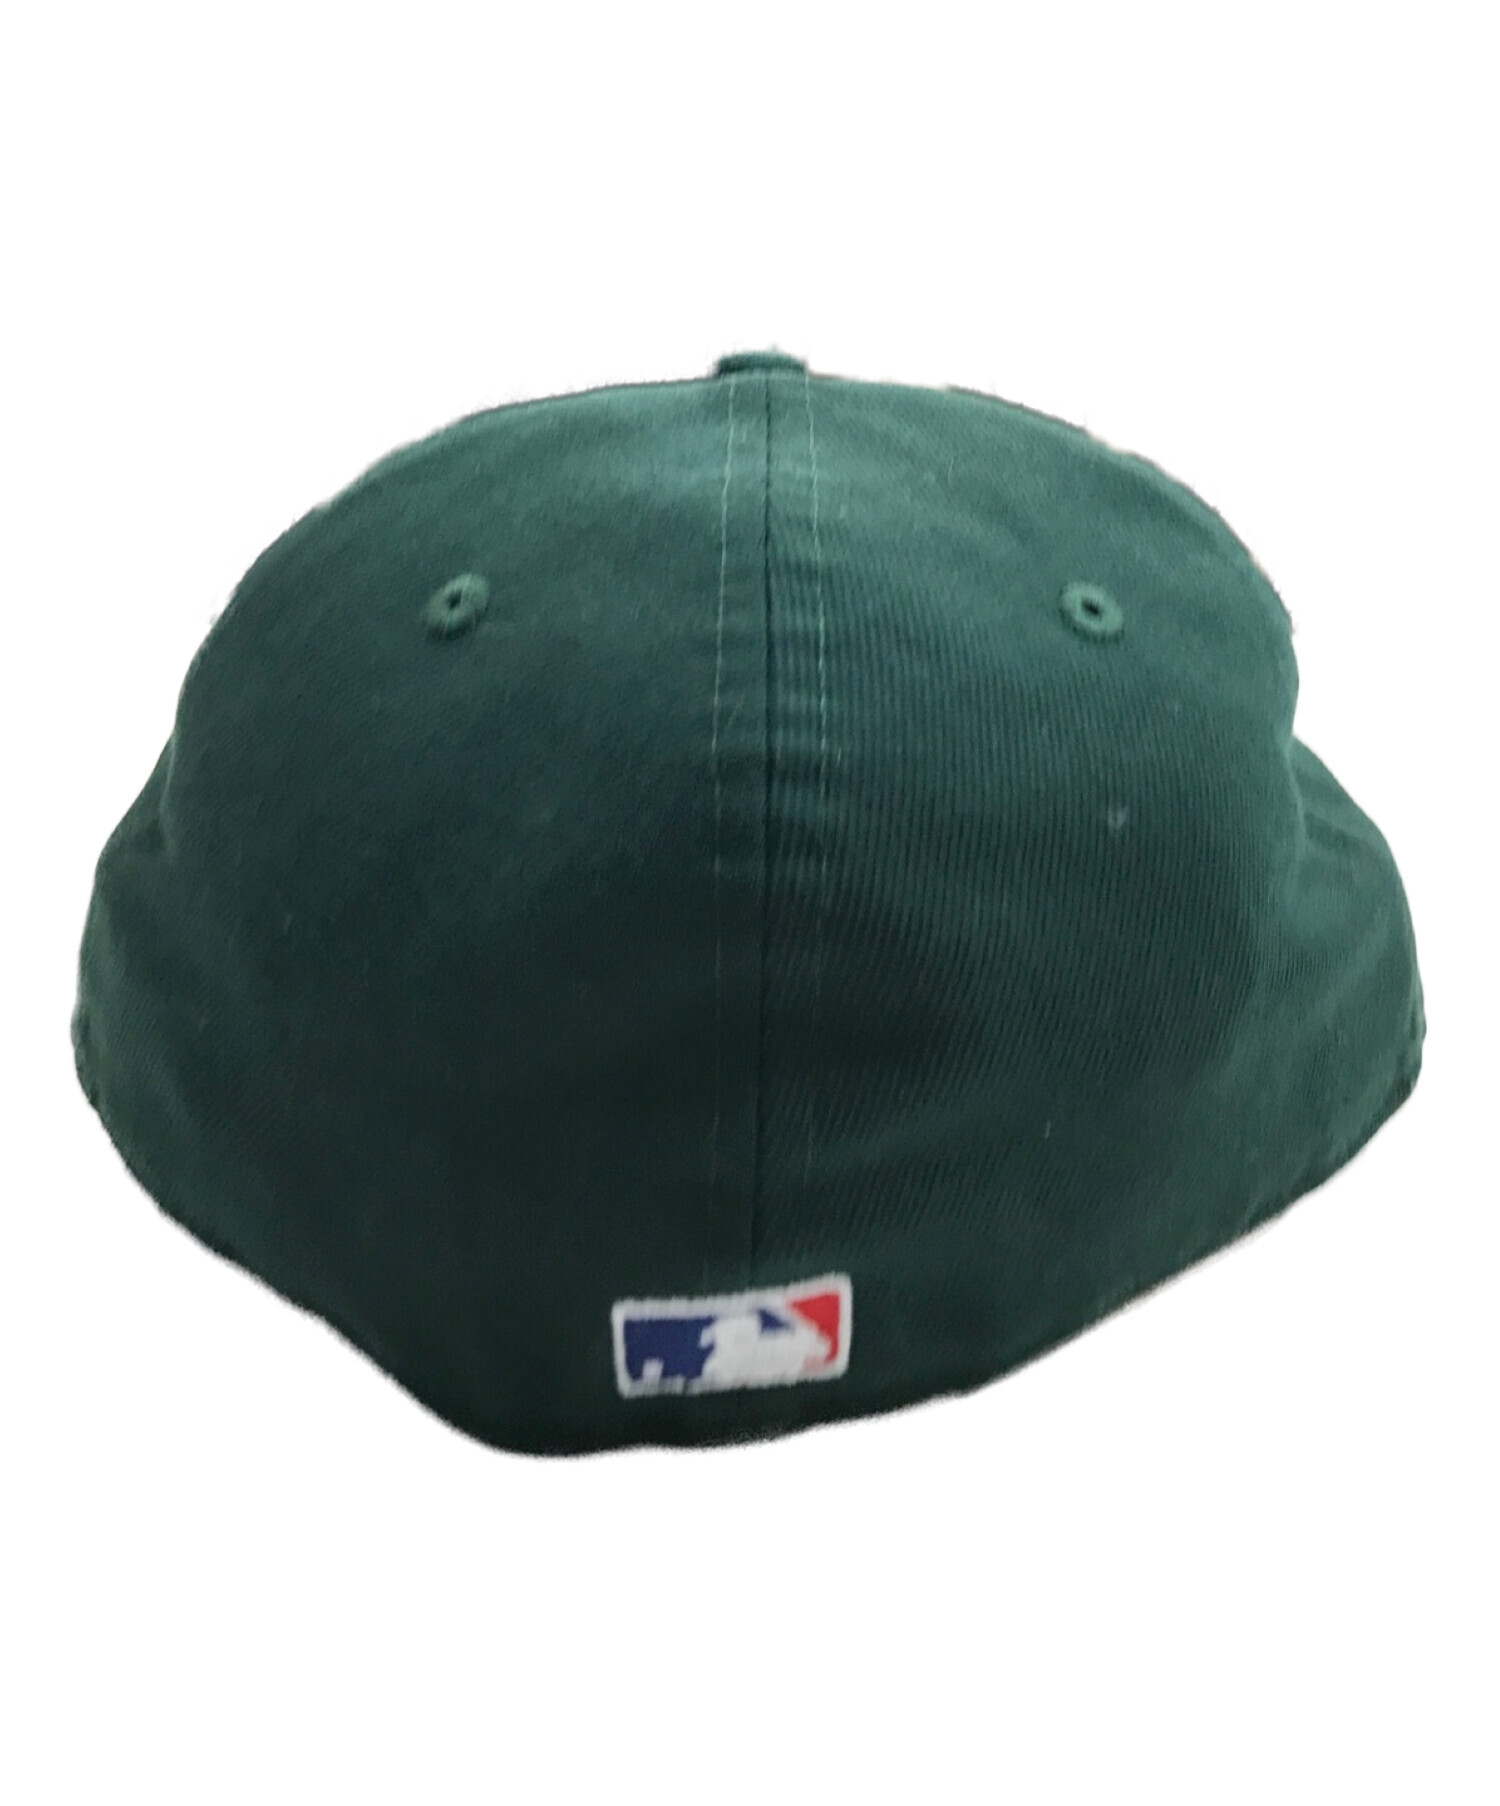 New Era (ニューエラ) Aime Leon Dore (エメレオンドレ) Yankees Ballpark Hat グリーン サイズ:7 4/3